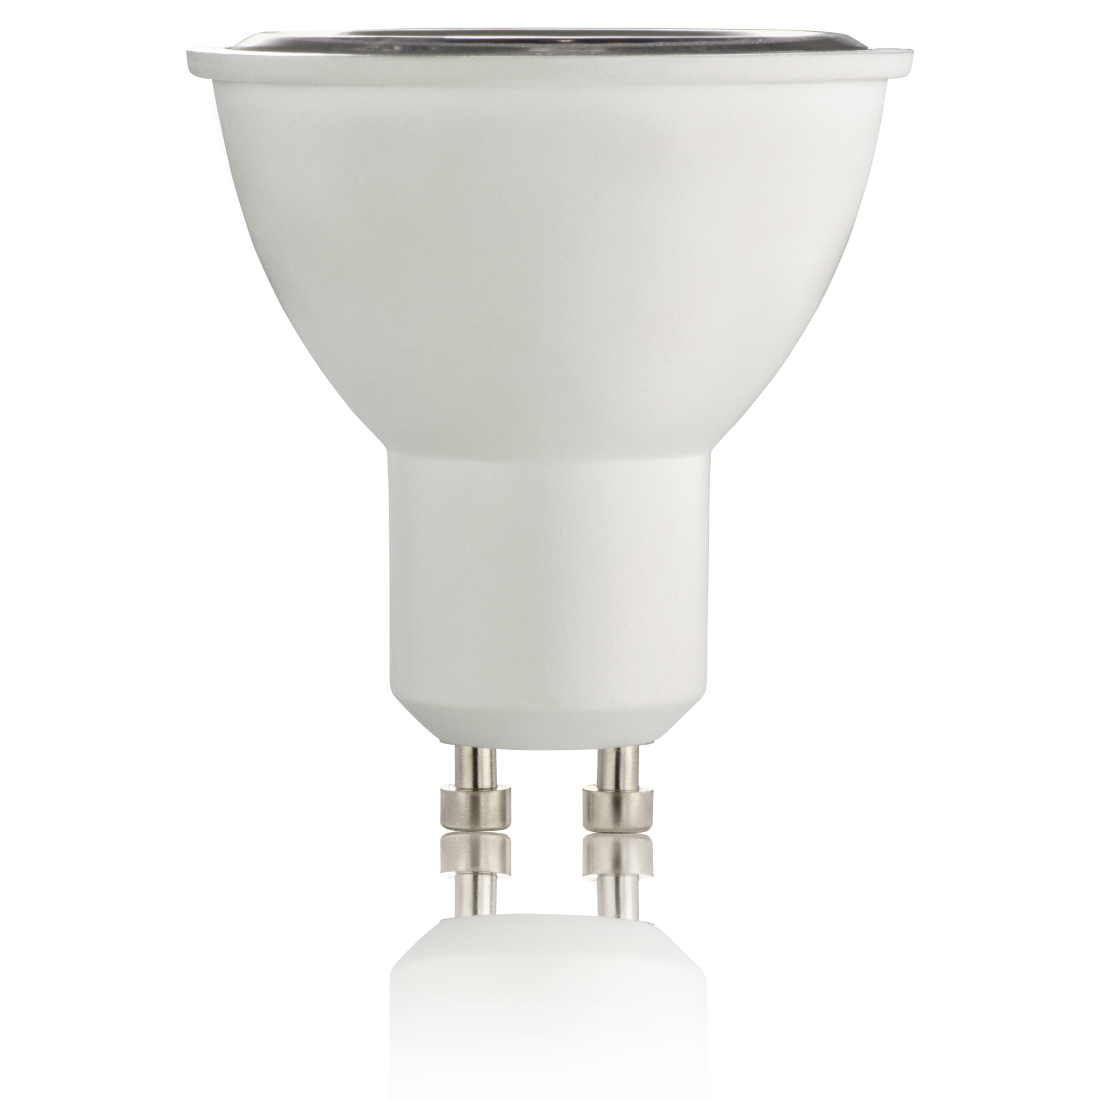 abx2 High-Res Image 2 - Xavax, LED Bulb, GU10, 400 lm Replaces 55W, PAR16 Reflector Bulb, warm white, RA90